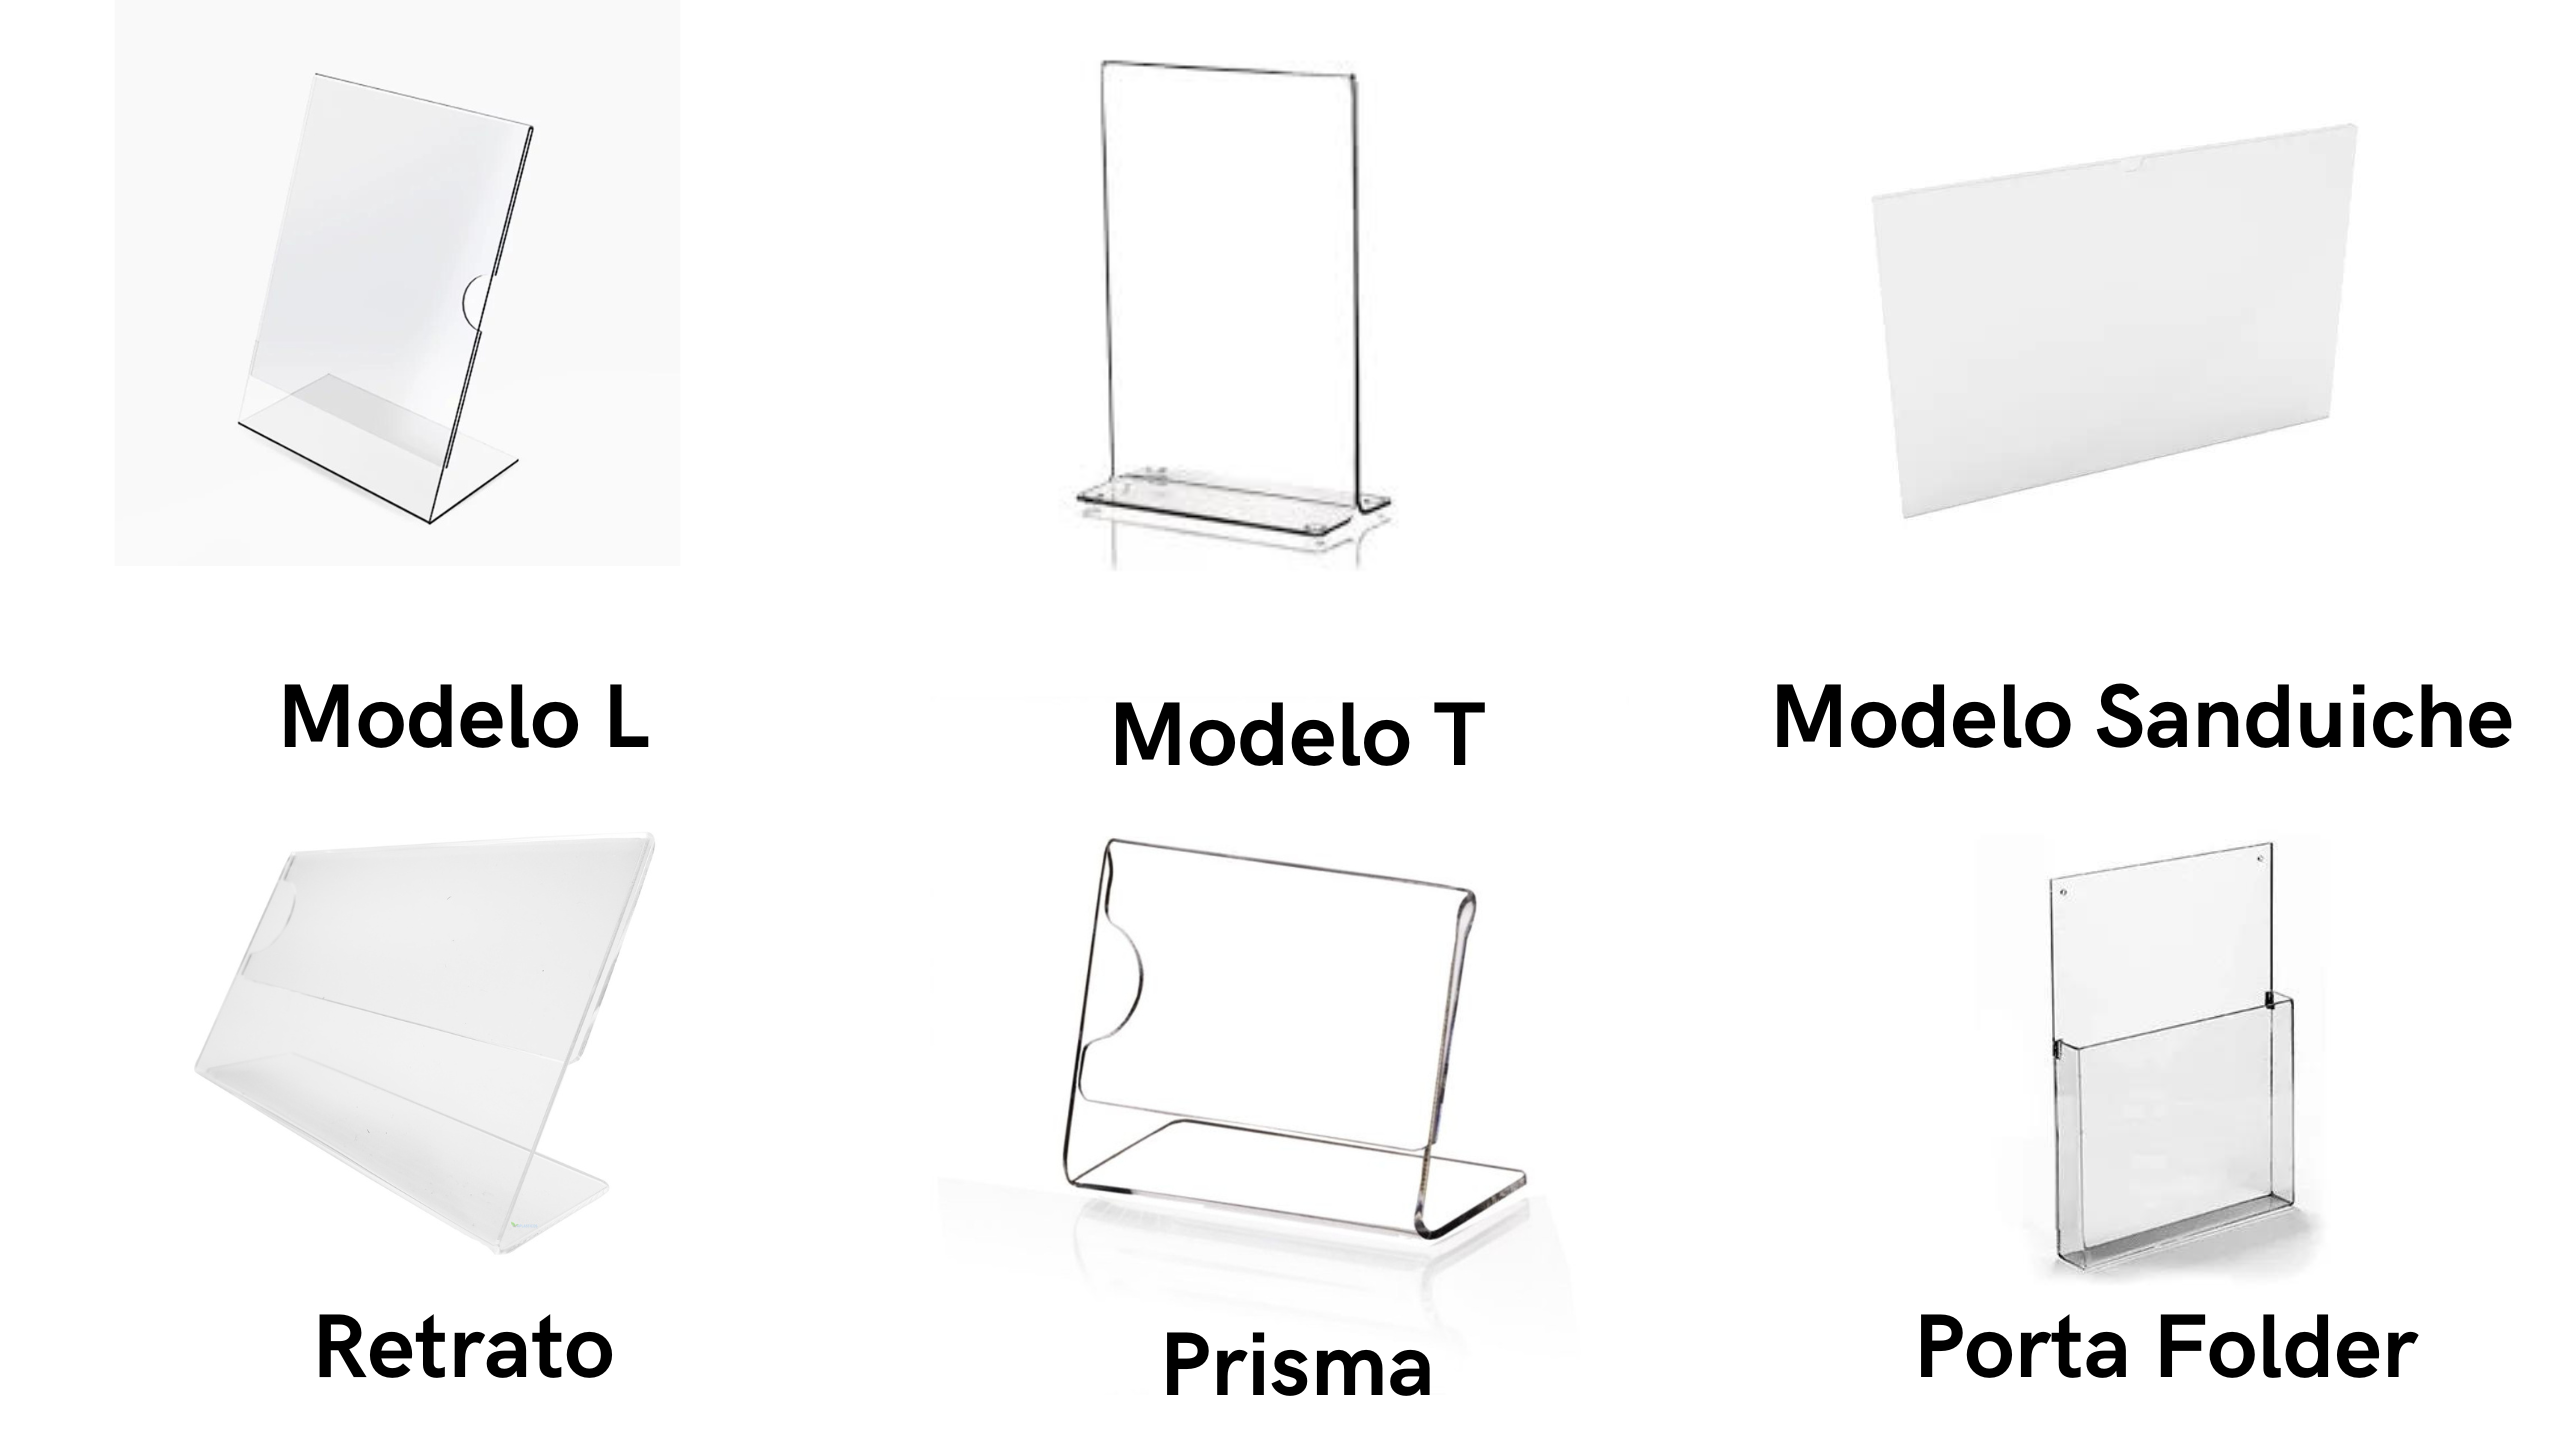 Modelos displays